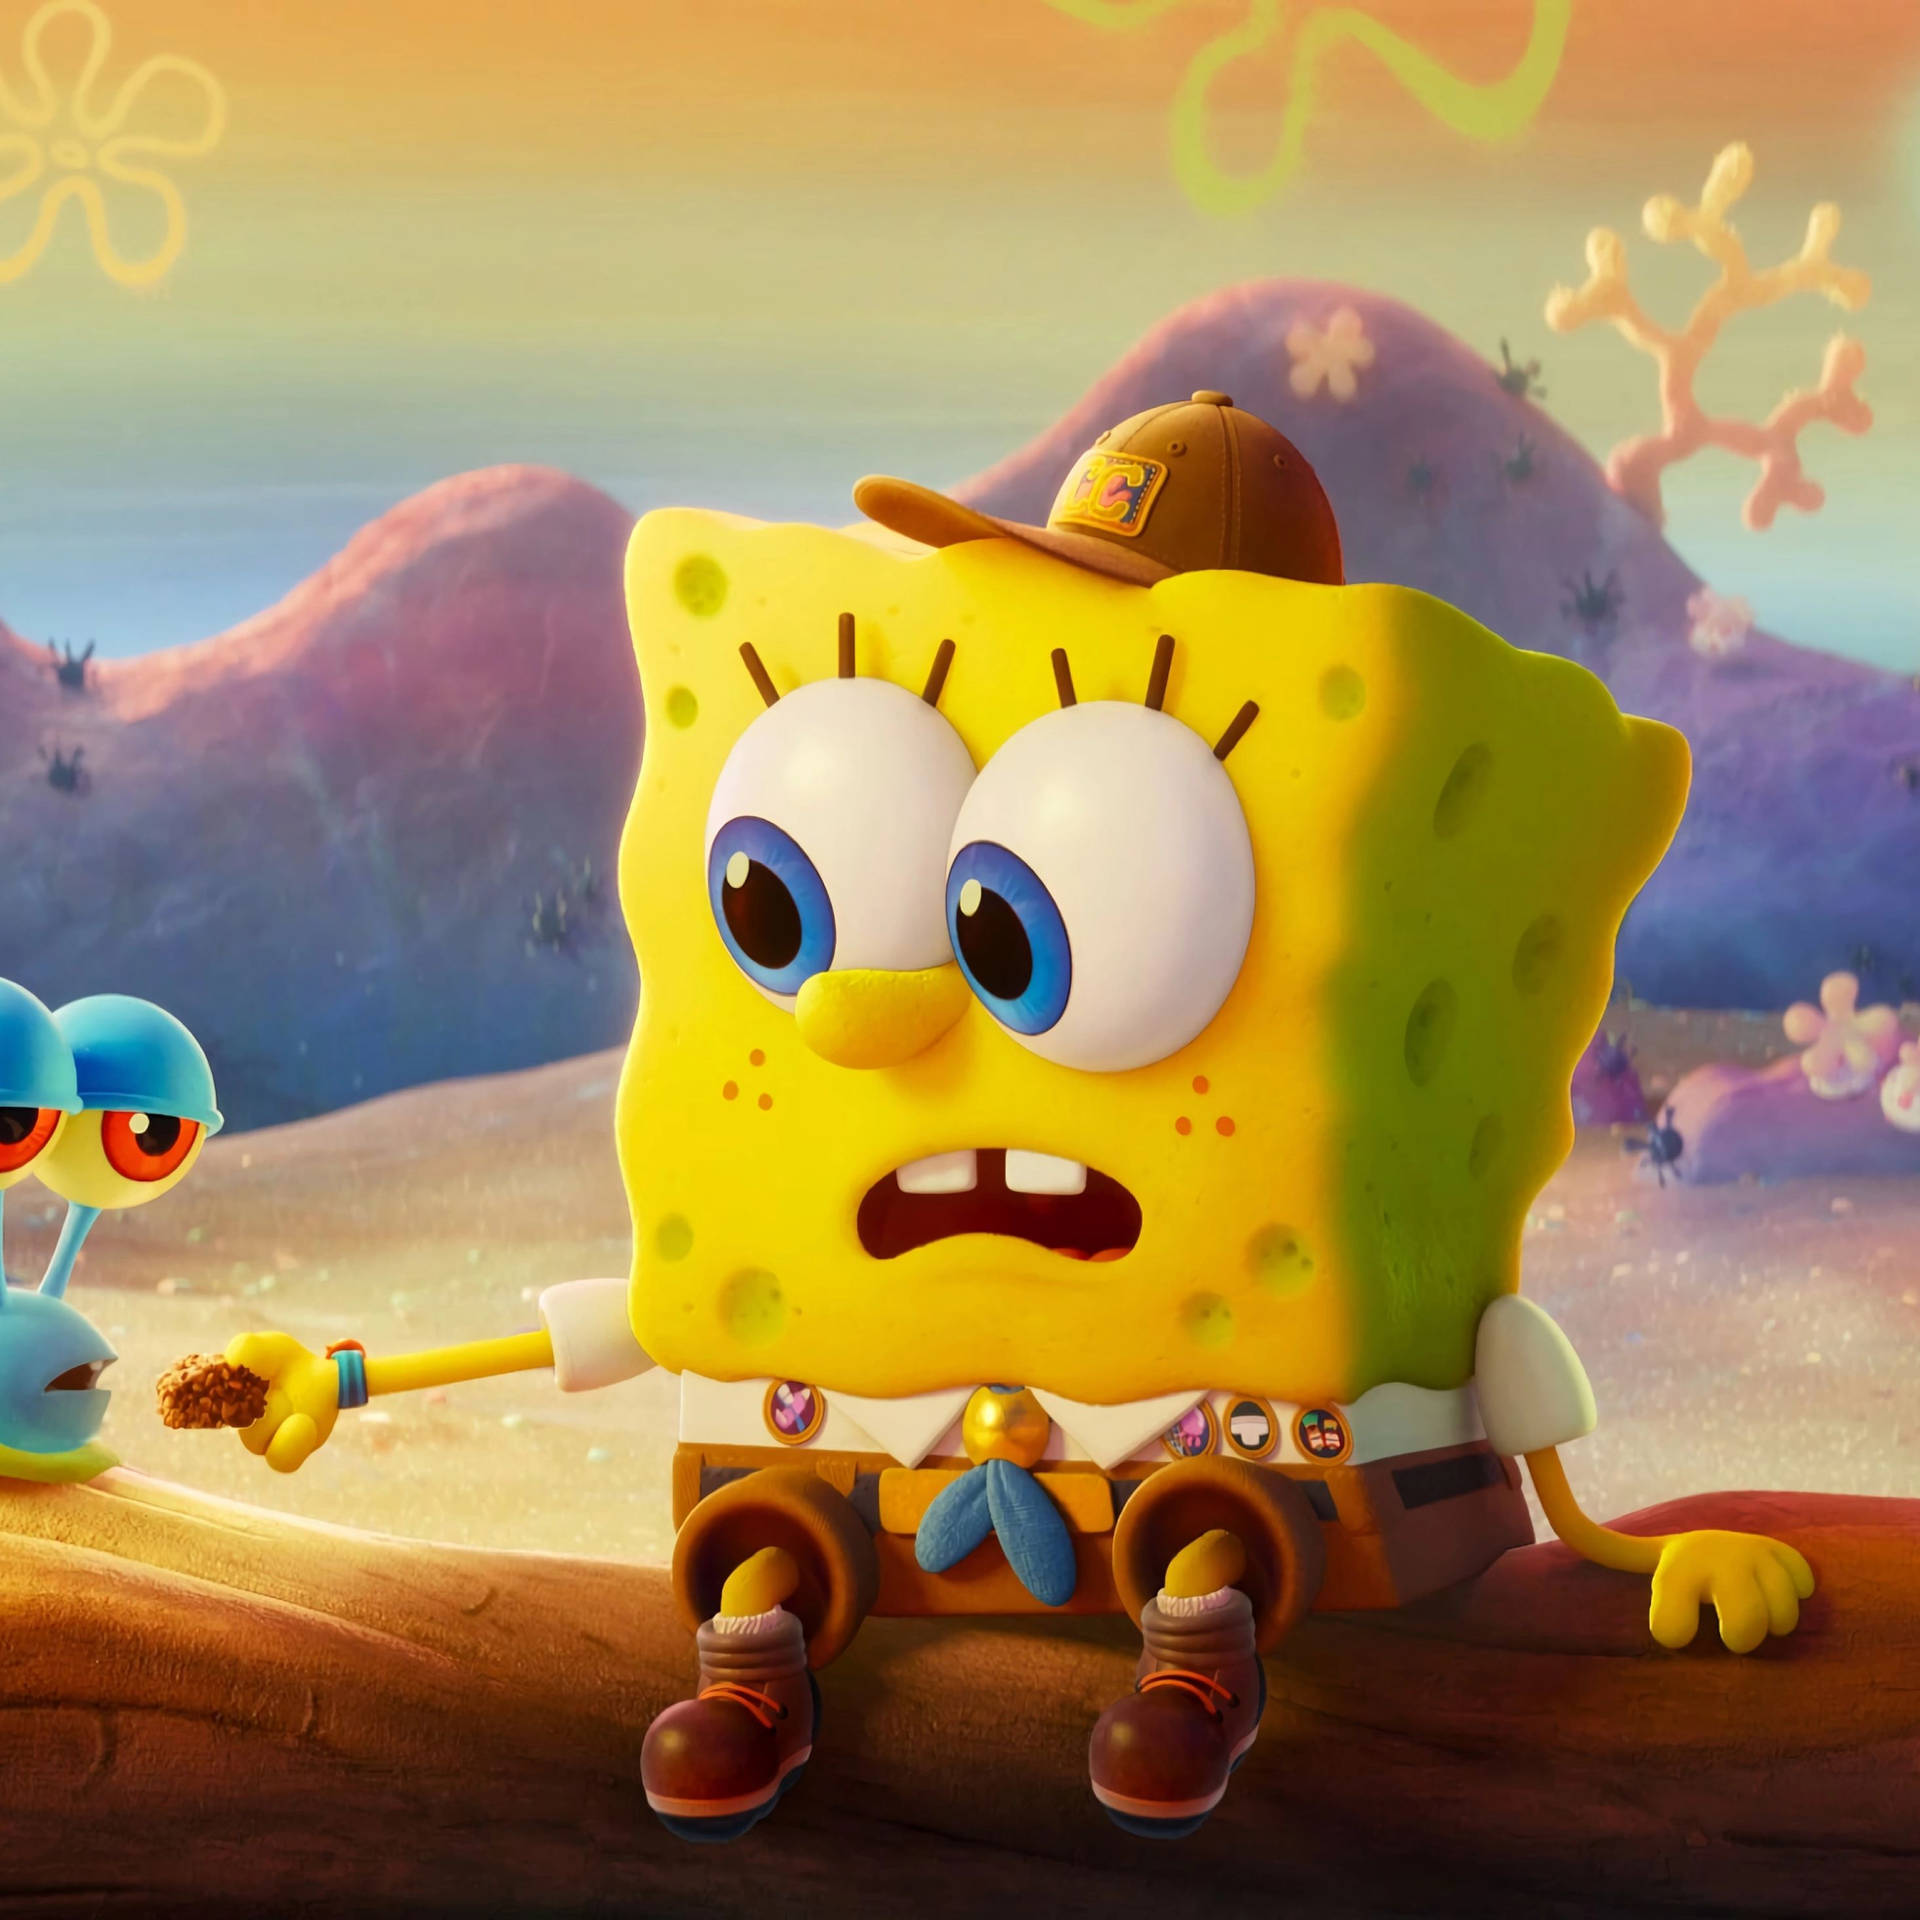 "Baby SpongeBob SquarePants adventurer, ready to explore new places!" Wallpaper